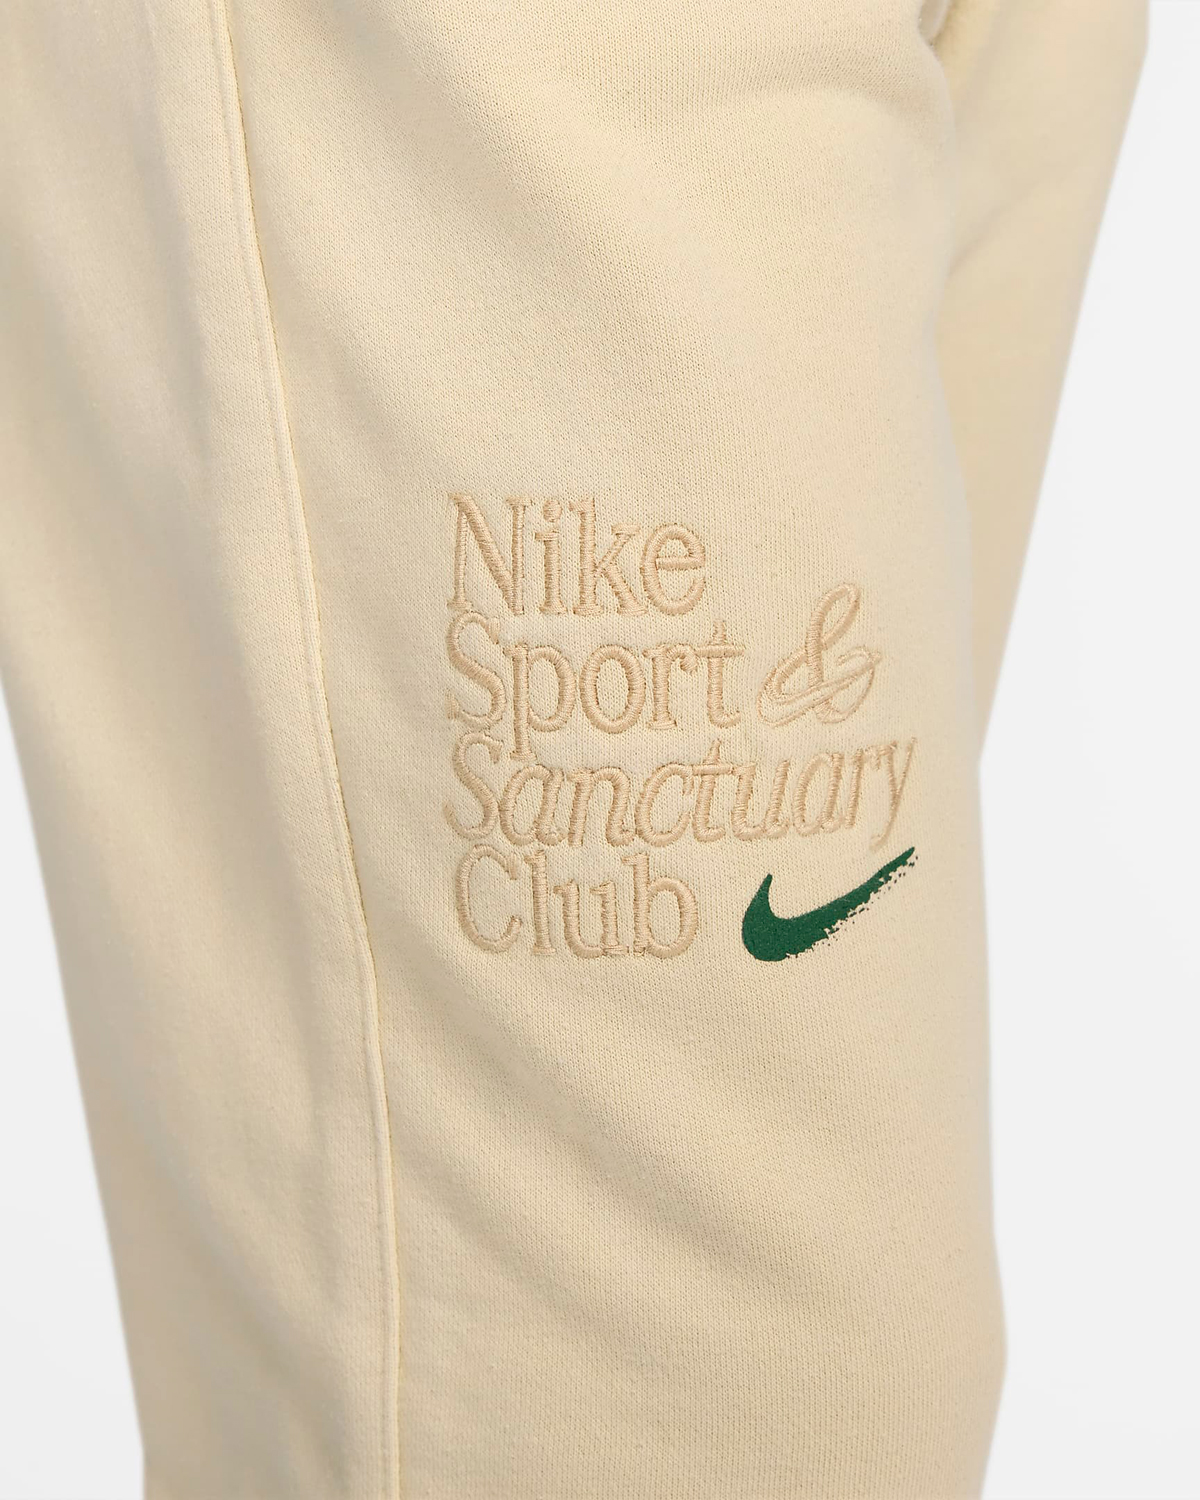 Nike-Sport-Sanctuary-Club-Pants-Sesame-Gorge-Green-2